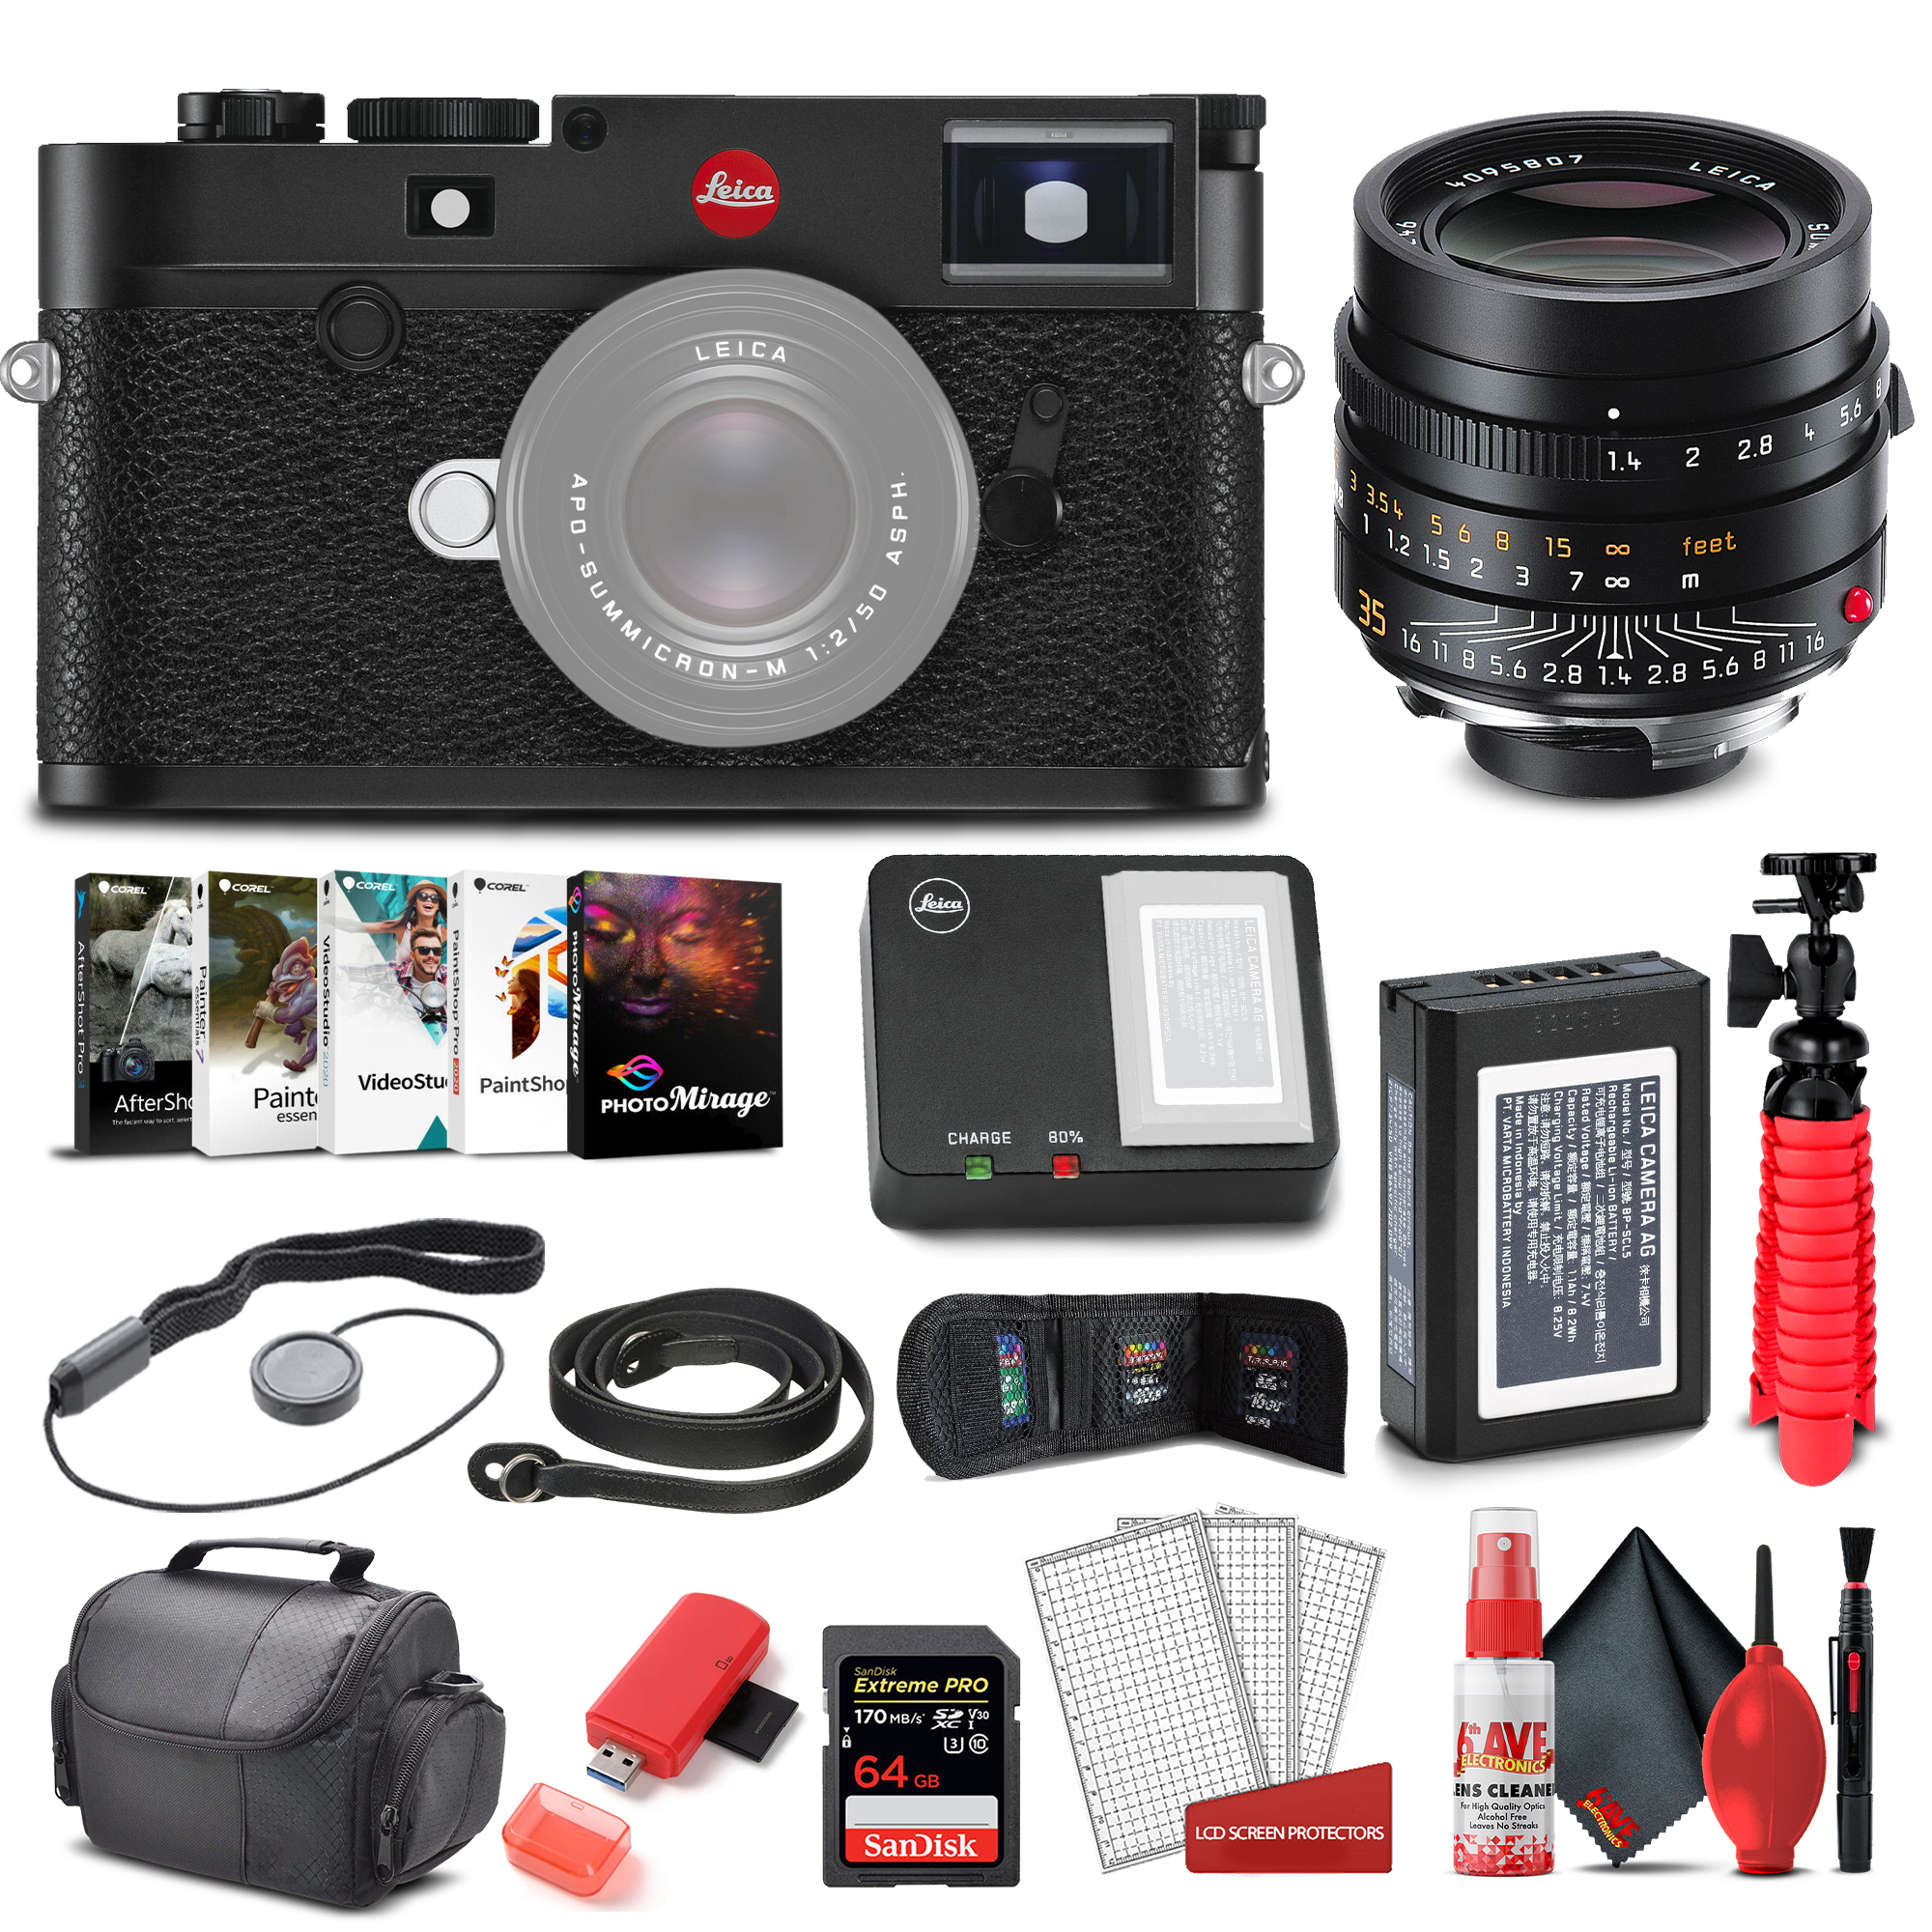 Leica M10 - R Digital Rangefinder Camera (Black Chrome) (20002) + Leica 35mm Lens (11663) + 64GB Extreme Pro Card + Corel Photo Software + Card Reader + Case + Flex Tripod and More - Deluxe Bundle - image 1 of 8